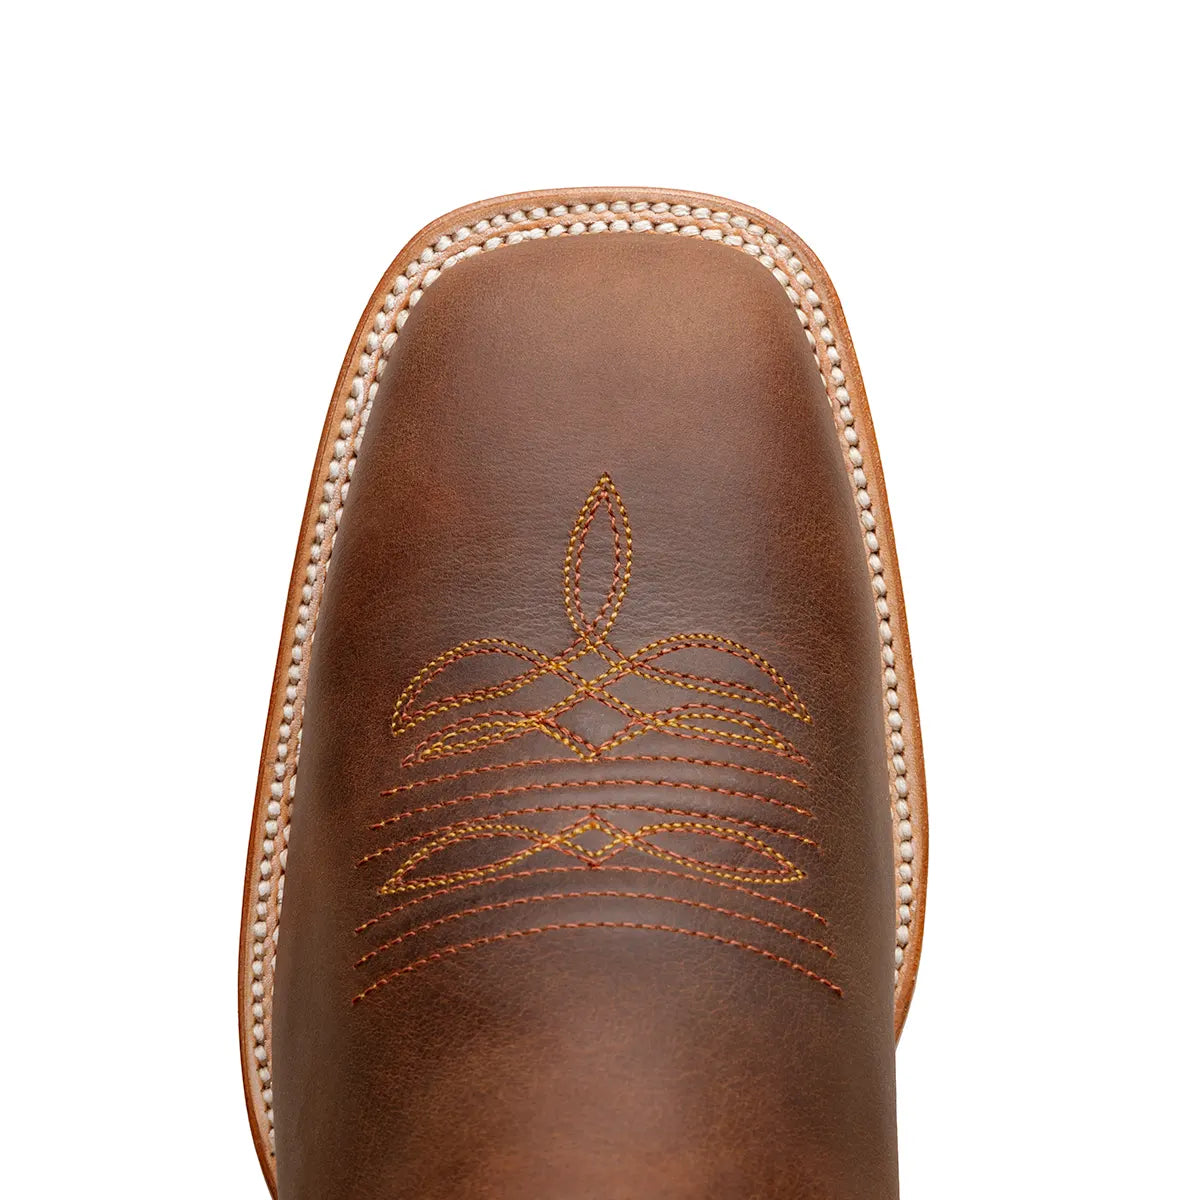 Rio Distressed Leather Rodeo Square Toe Boot - Encino Bronze